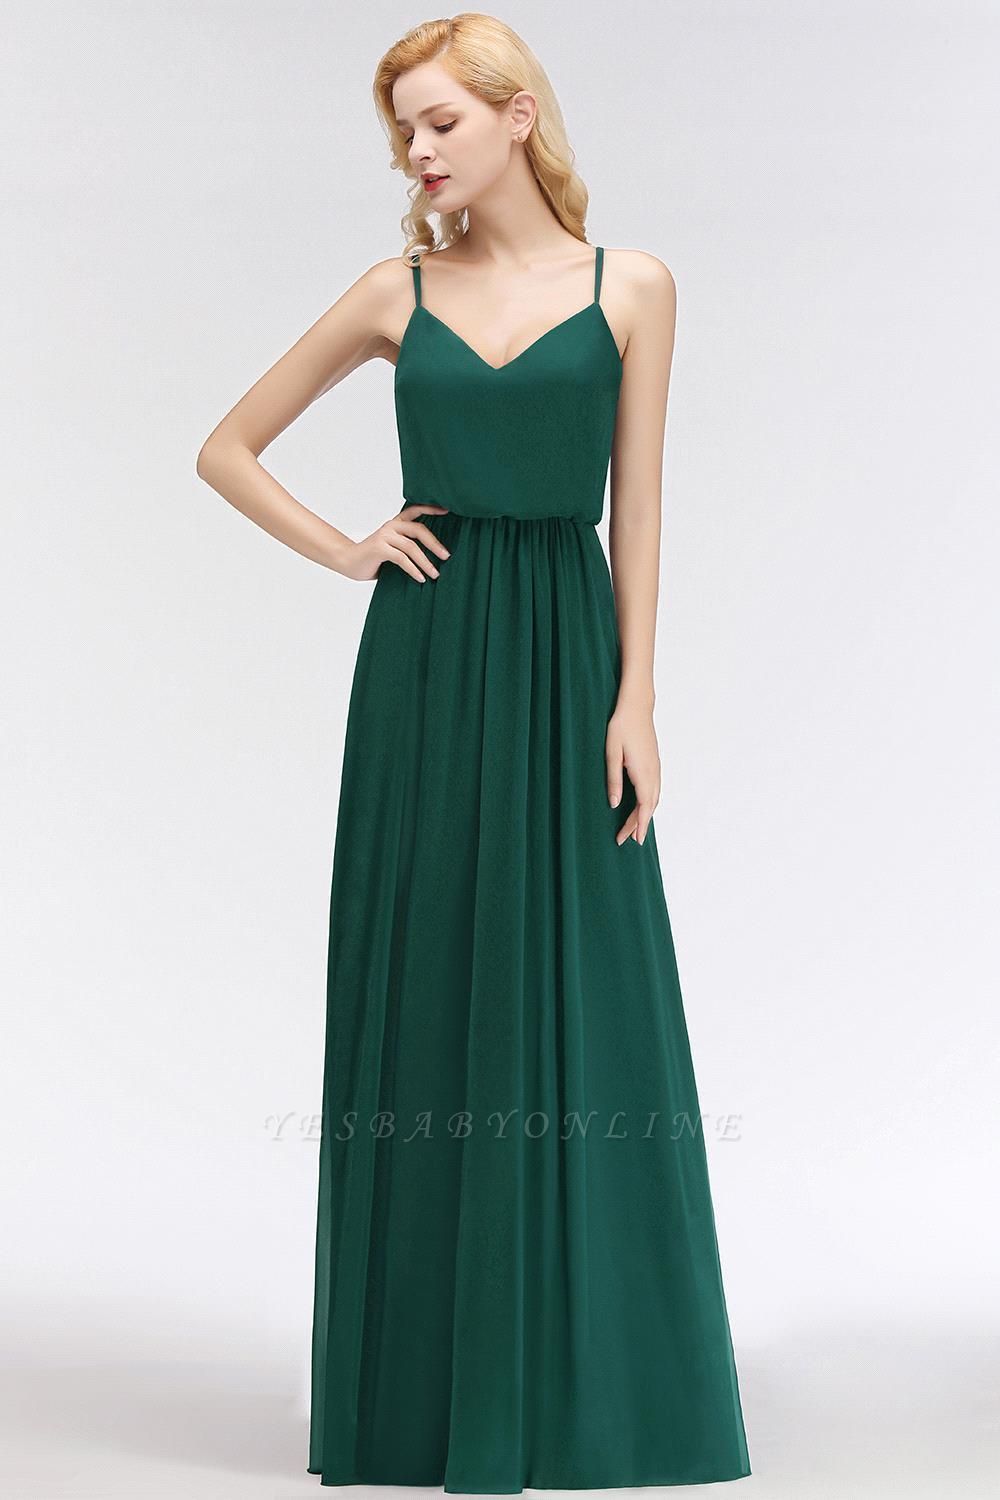 Dark-Green Chiffon A-Line Elegant Spaghetti-Straps Bridesmaid Dress